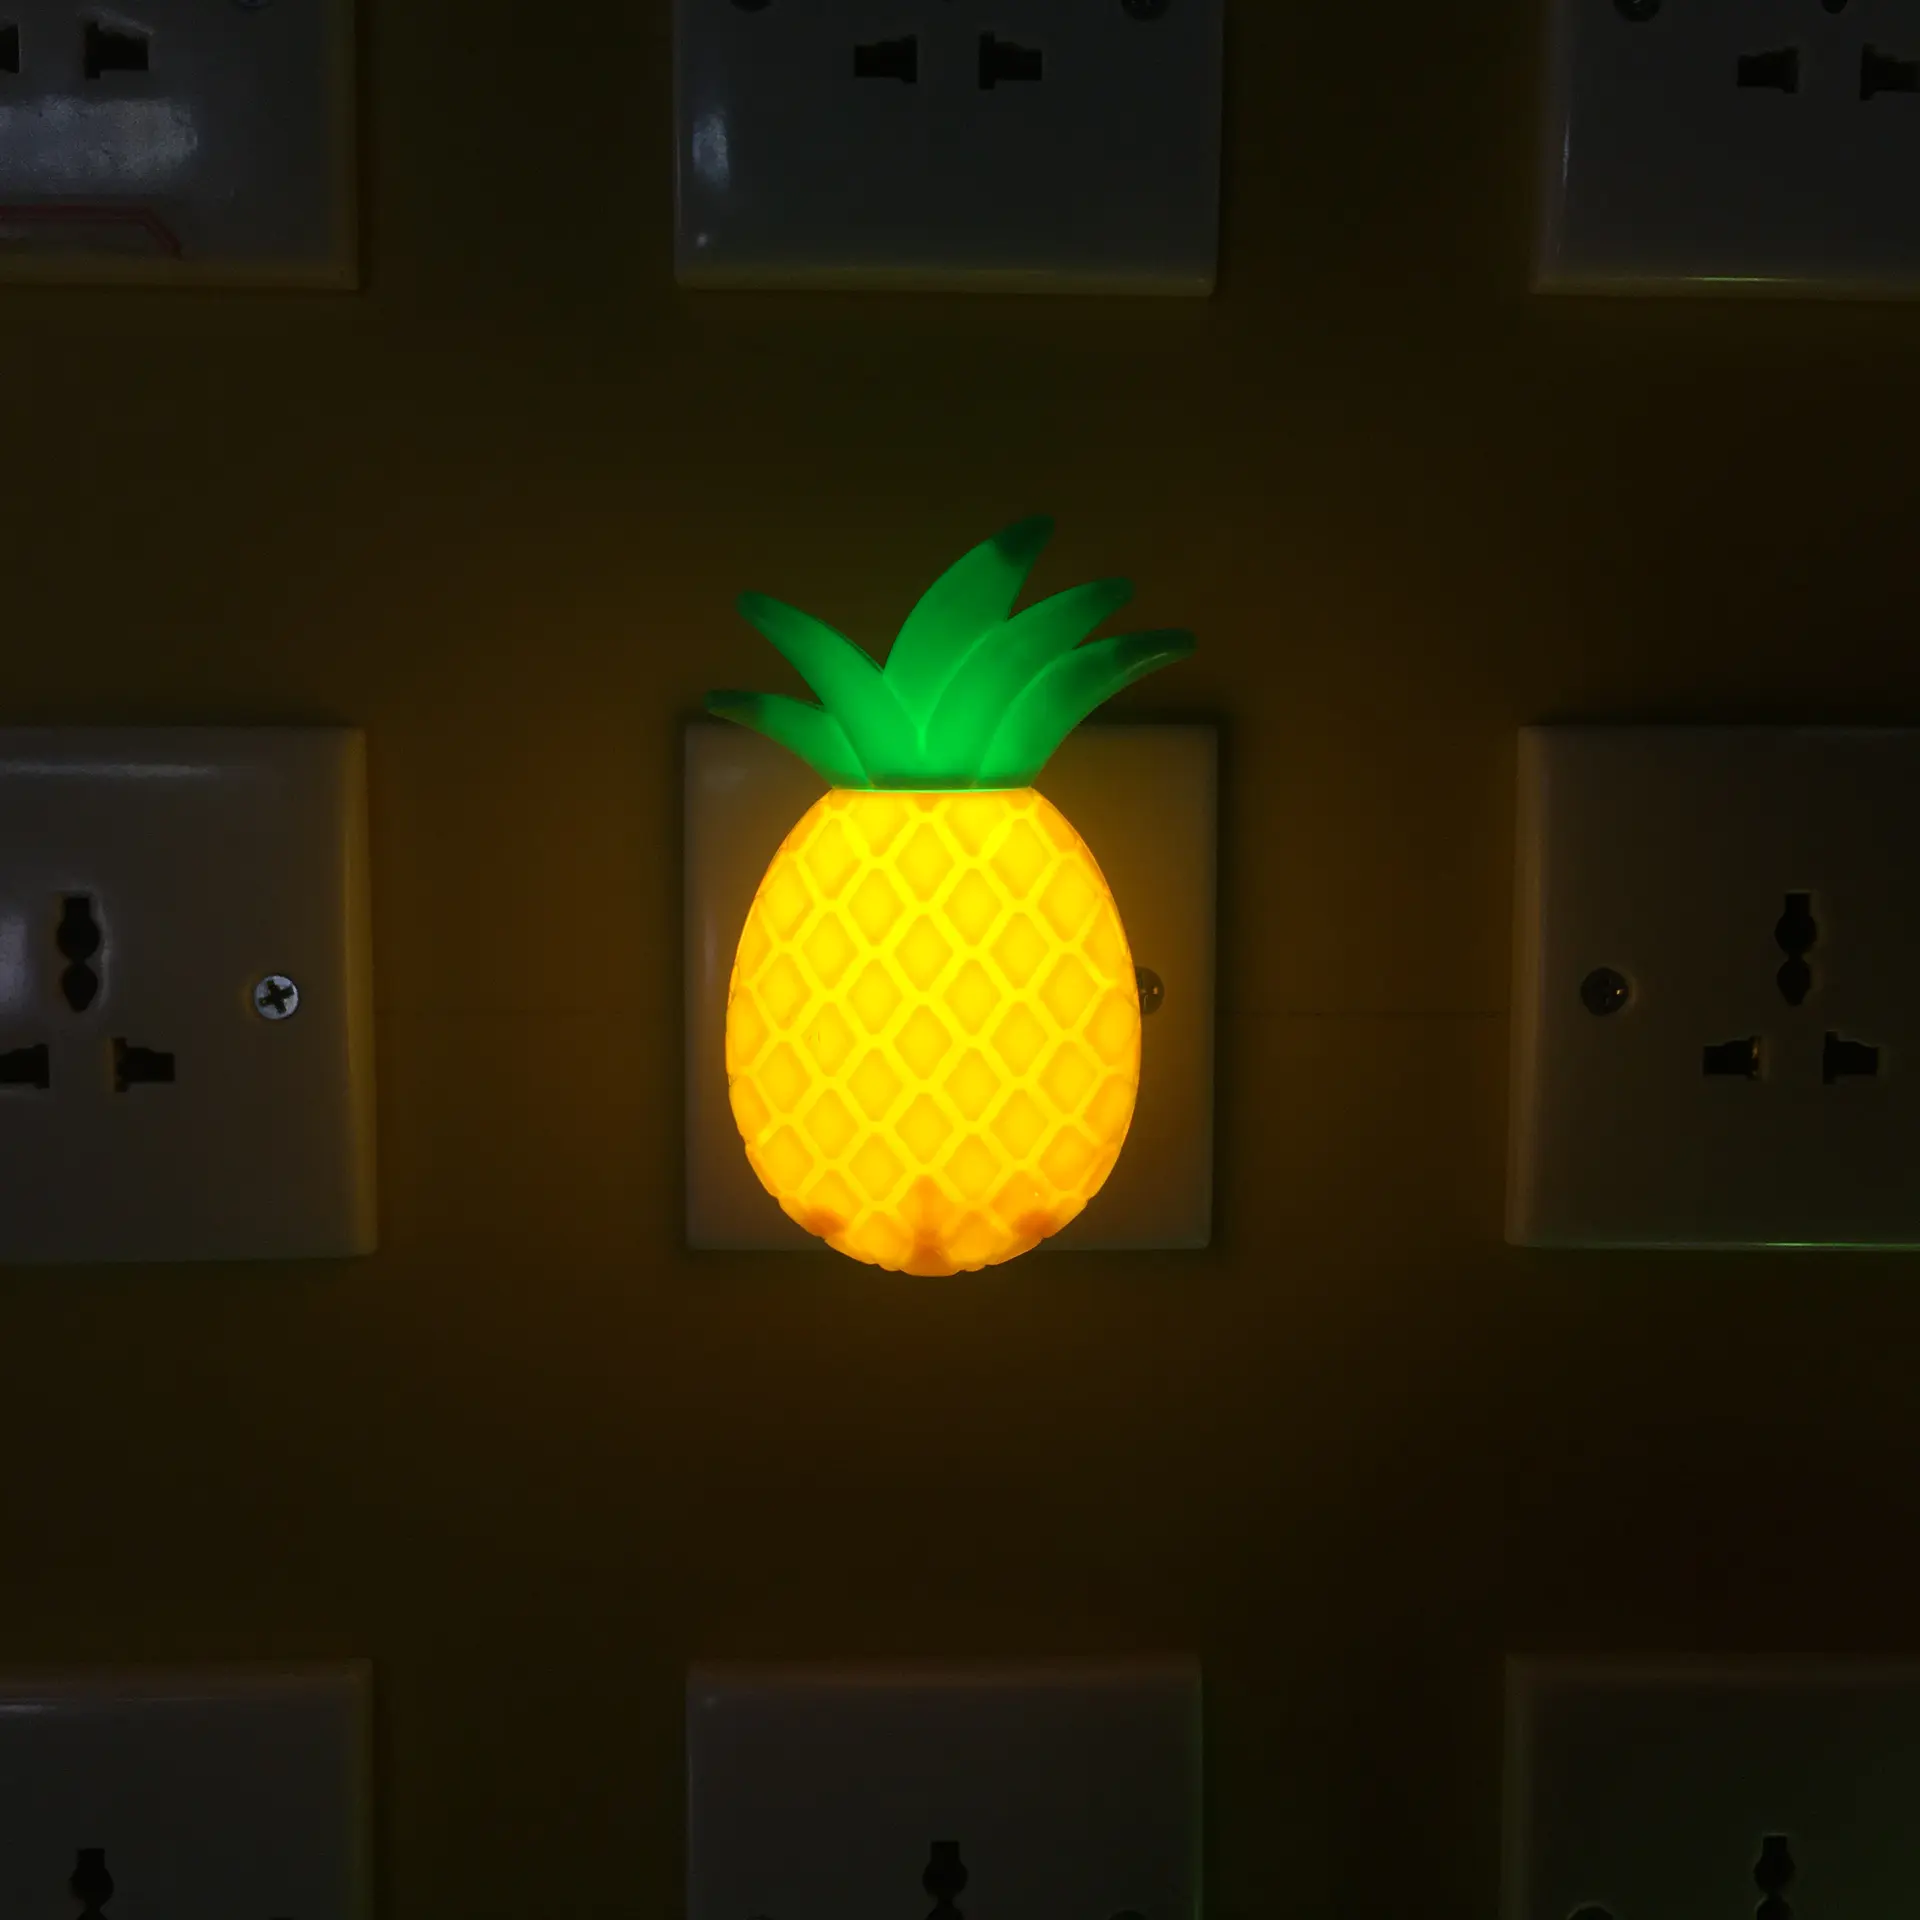 W041 OEM LED plug in night lamp Cartoon Pineapple Night Light 4 SMD mini switch with 0.6W AC 110V or 220V